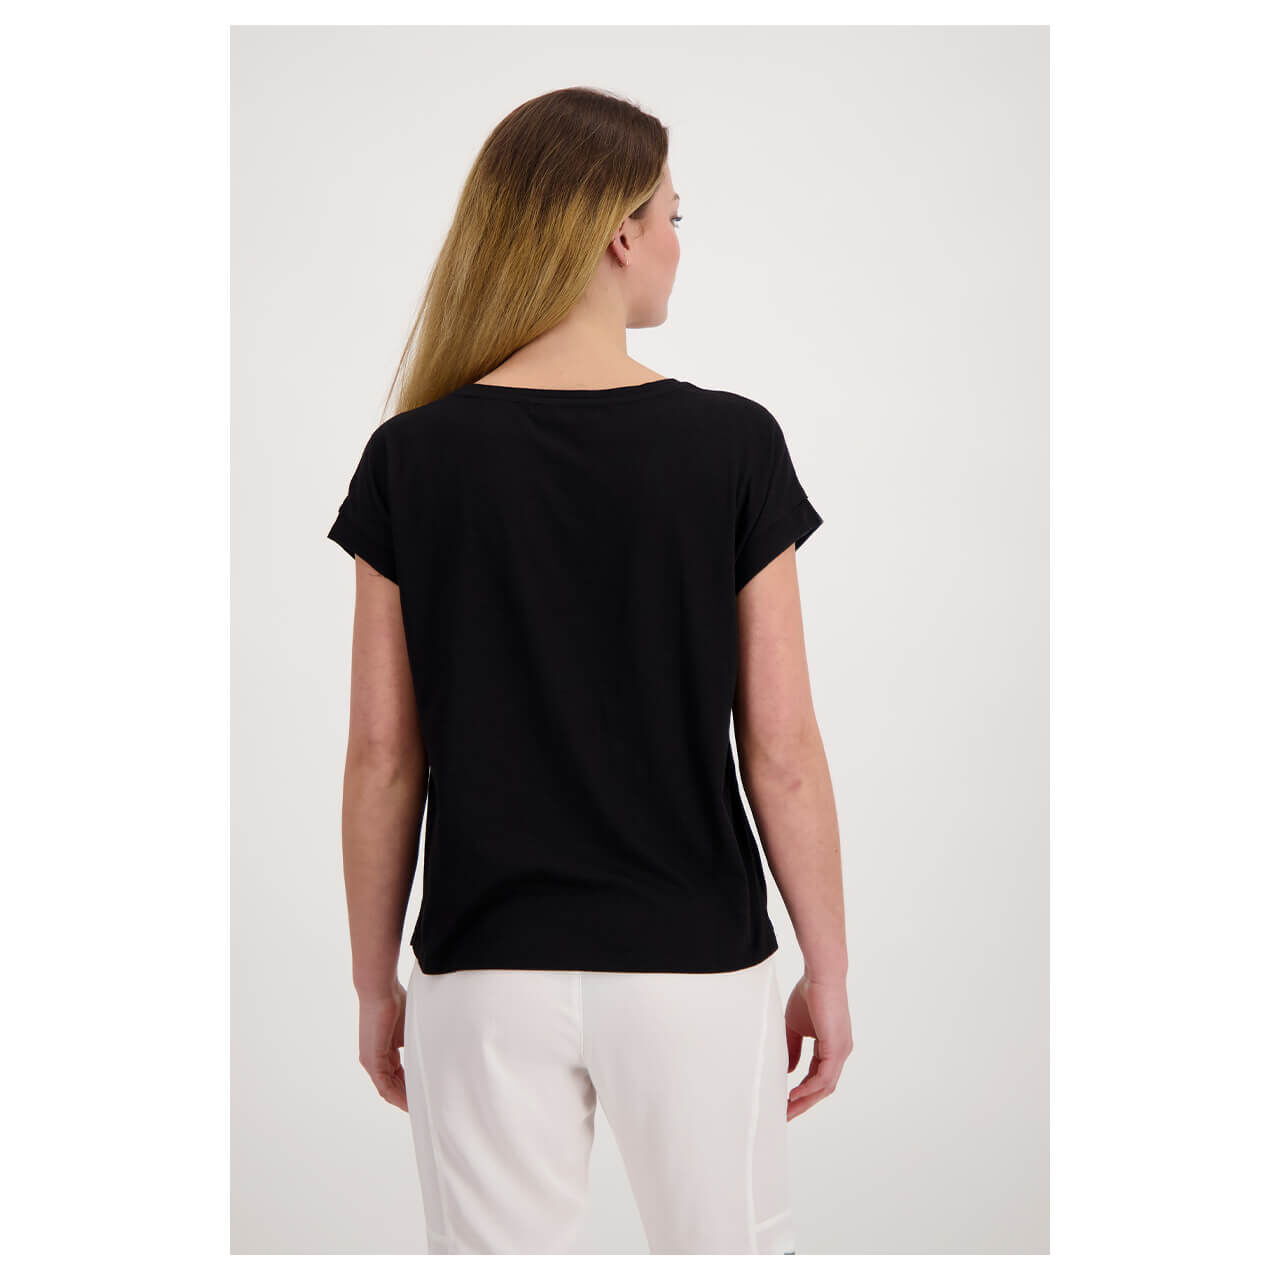 Monari Damen T-Shirt black sporty elegance